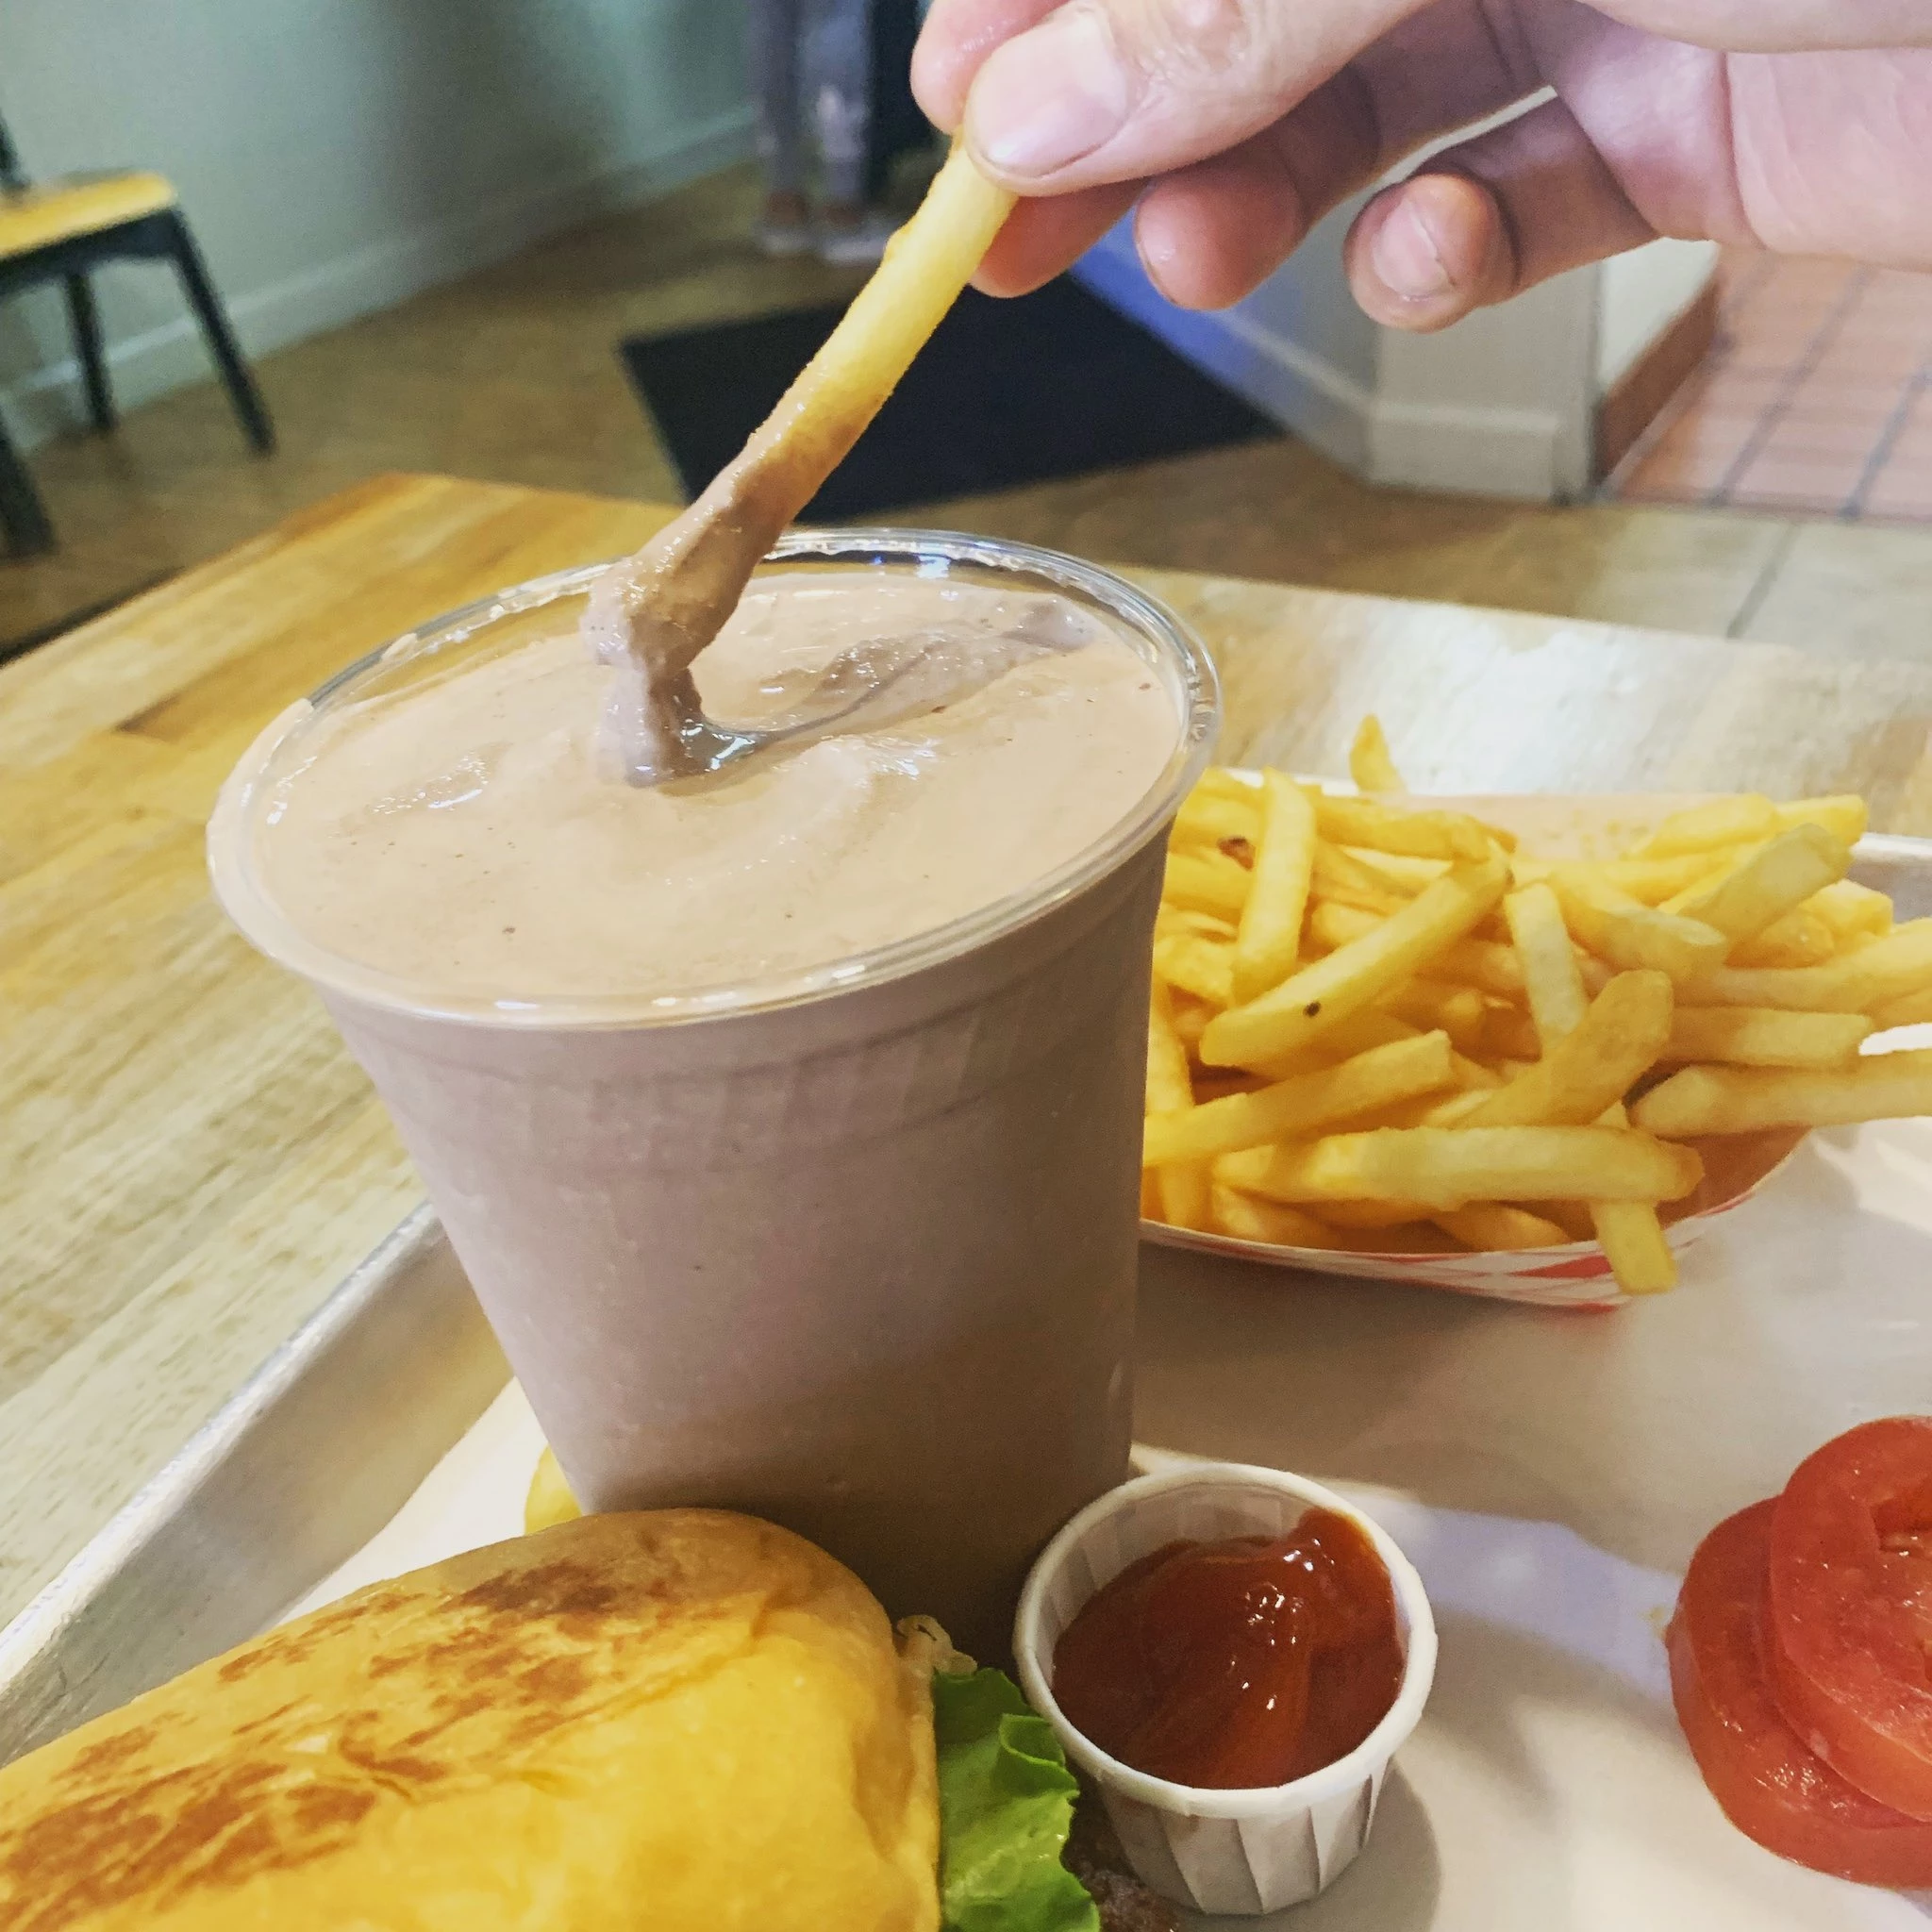 Weirdest food combos: French Fries In Milkshake